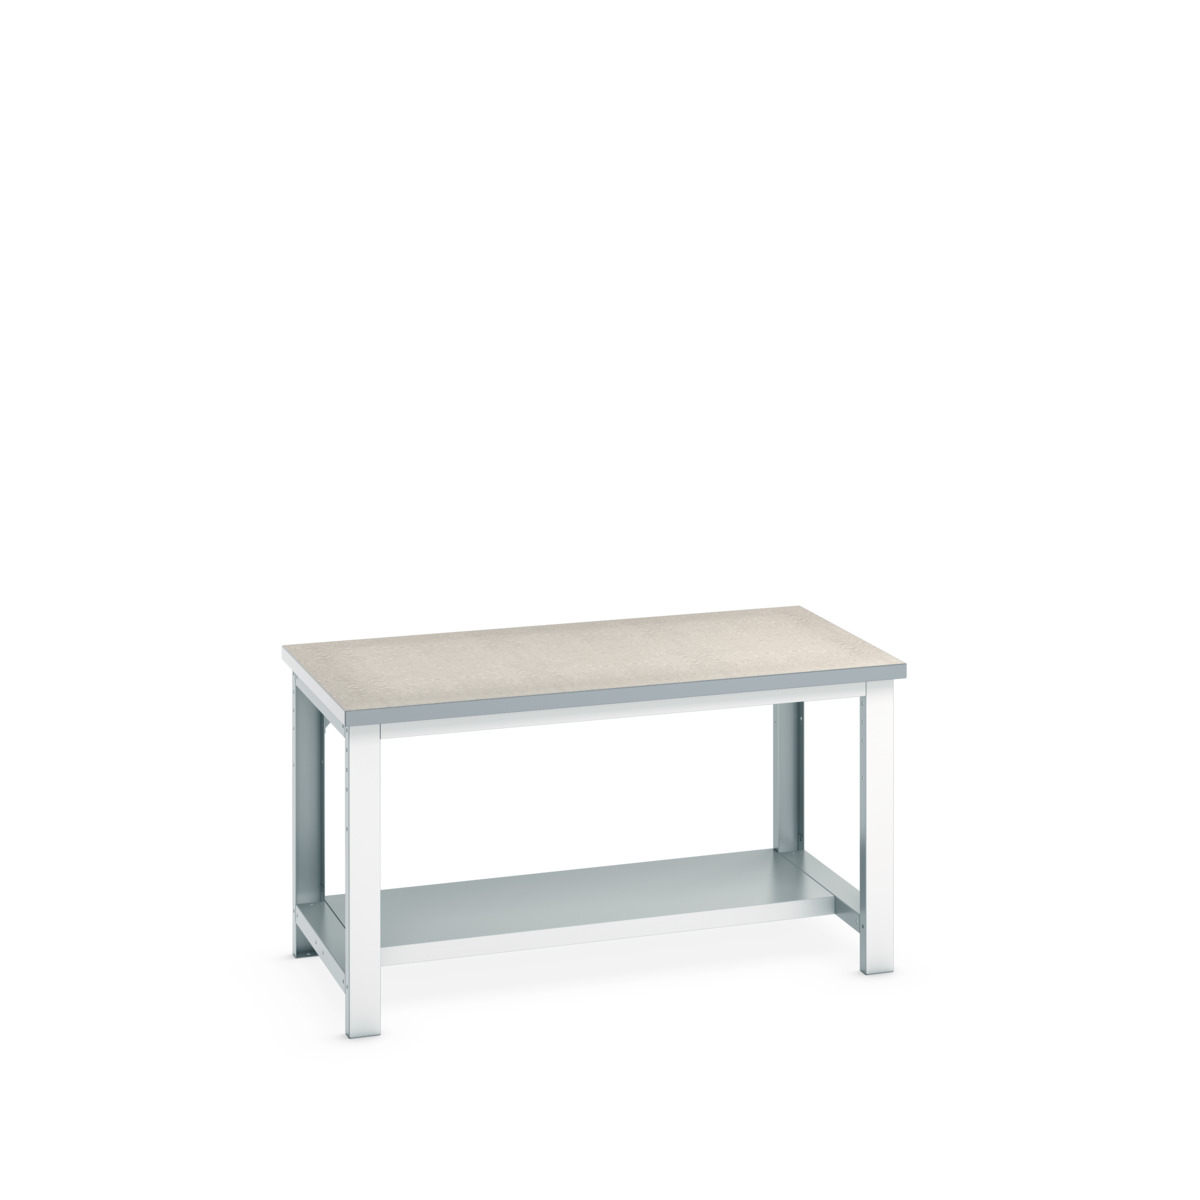 41004037. - cubio framework bench (lino)